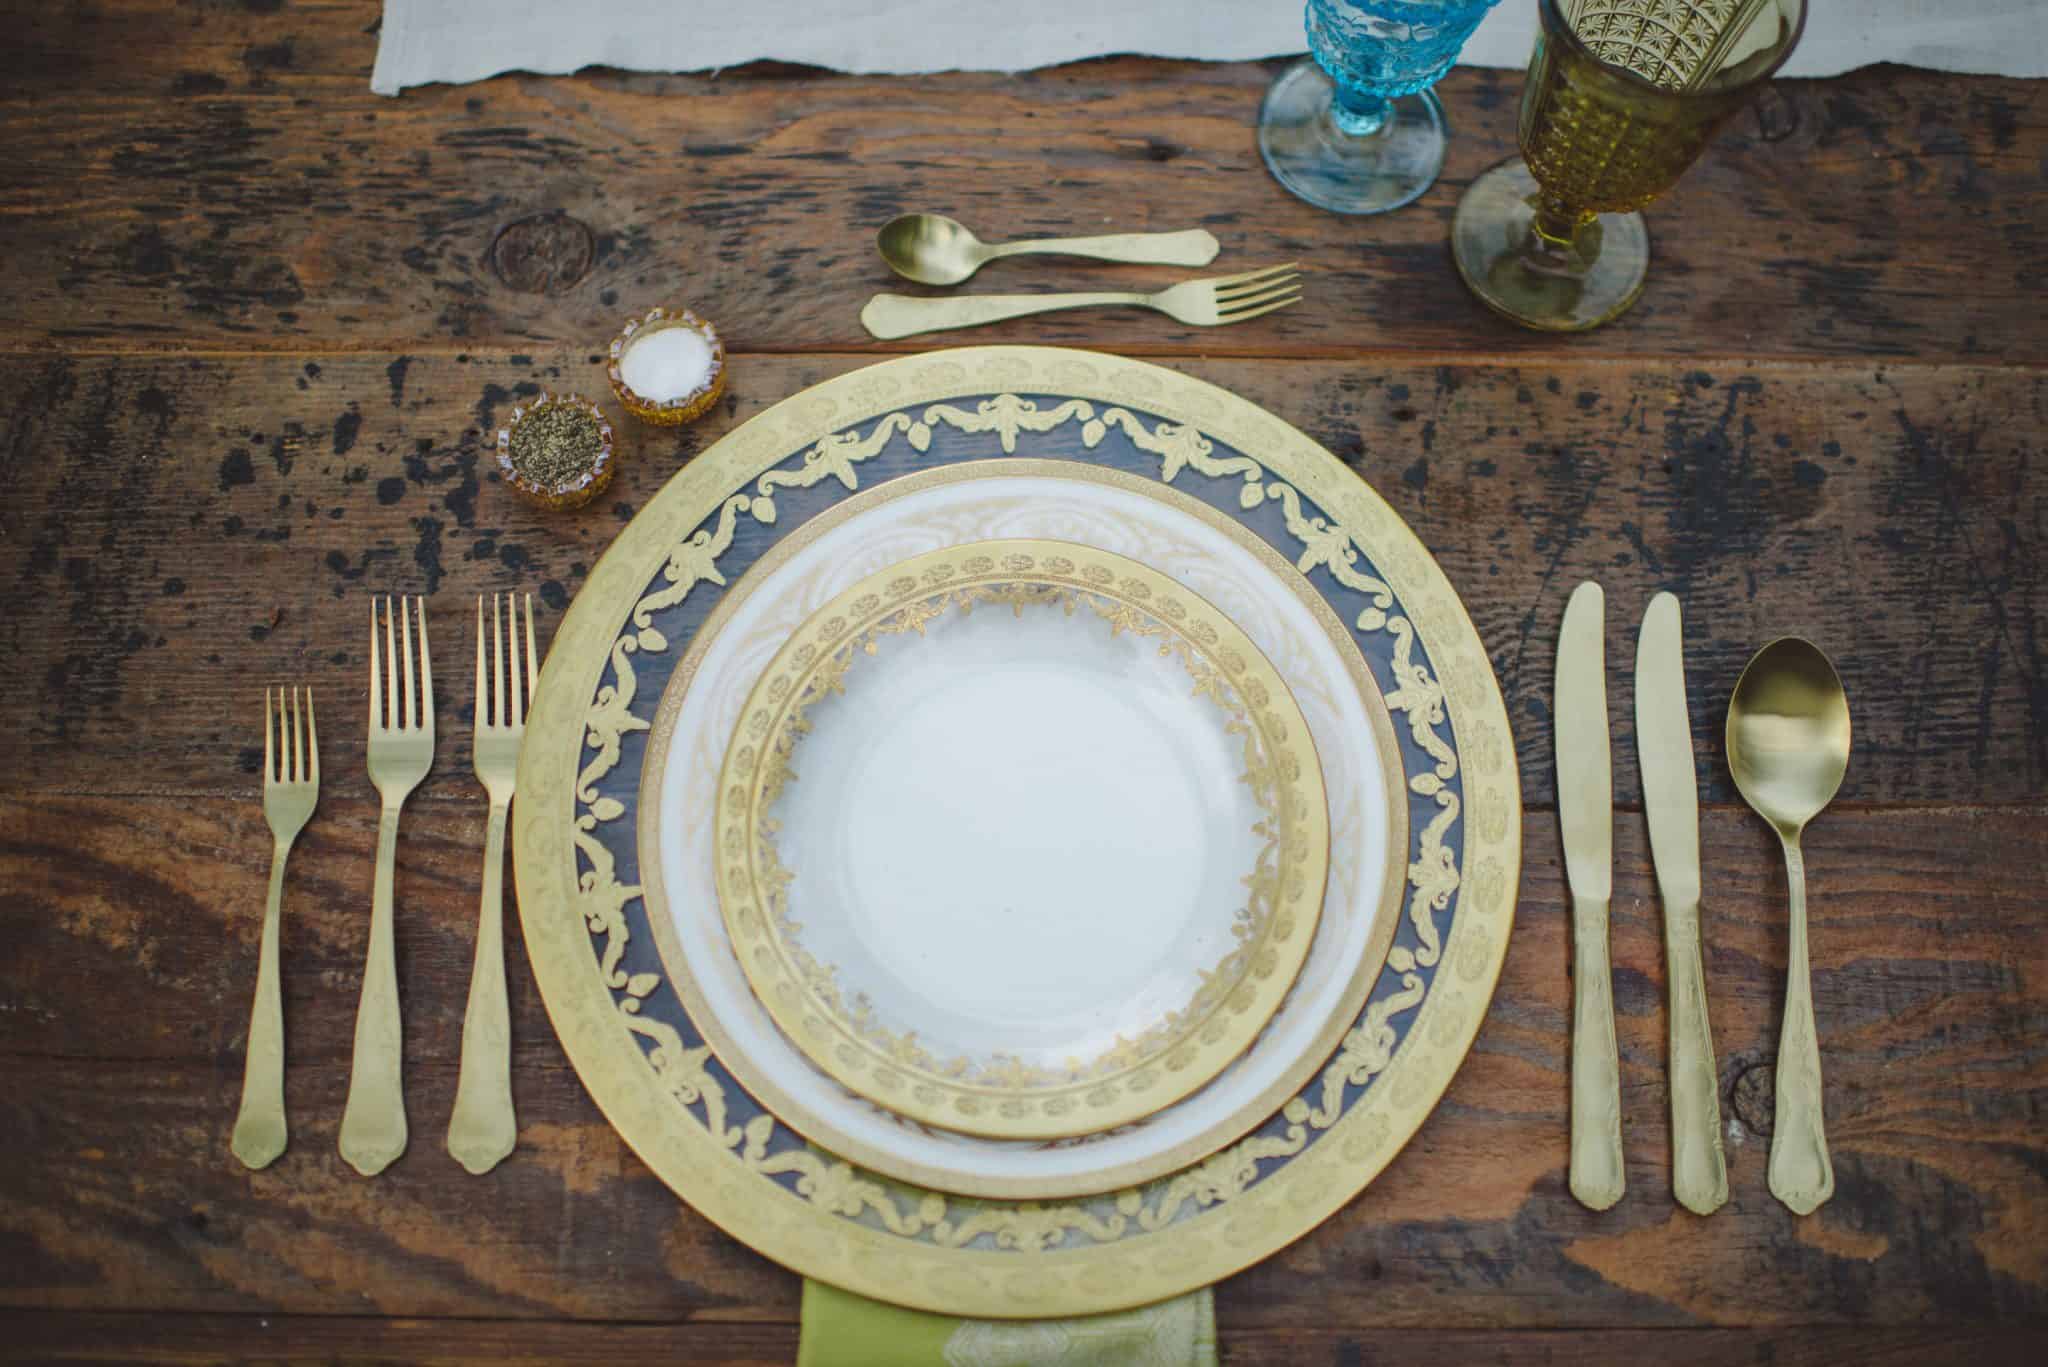 Ready Set Plate by Tiffani Thiessen • Photos by Rebecca Sanabria